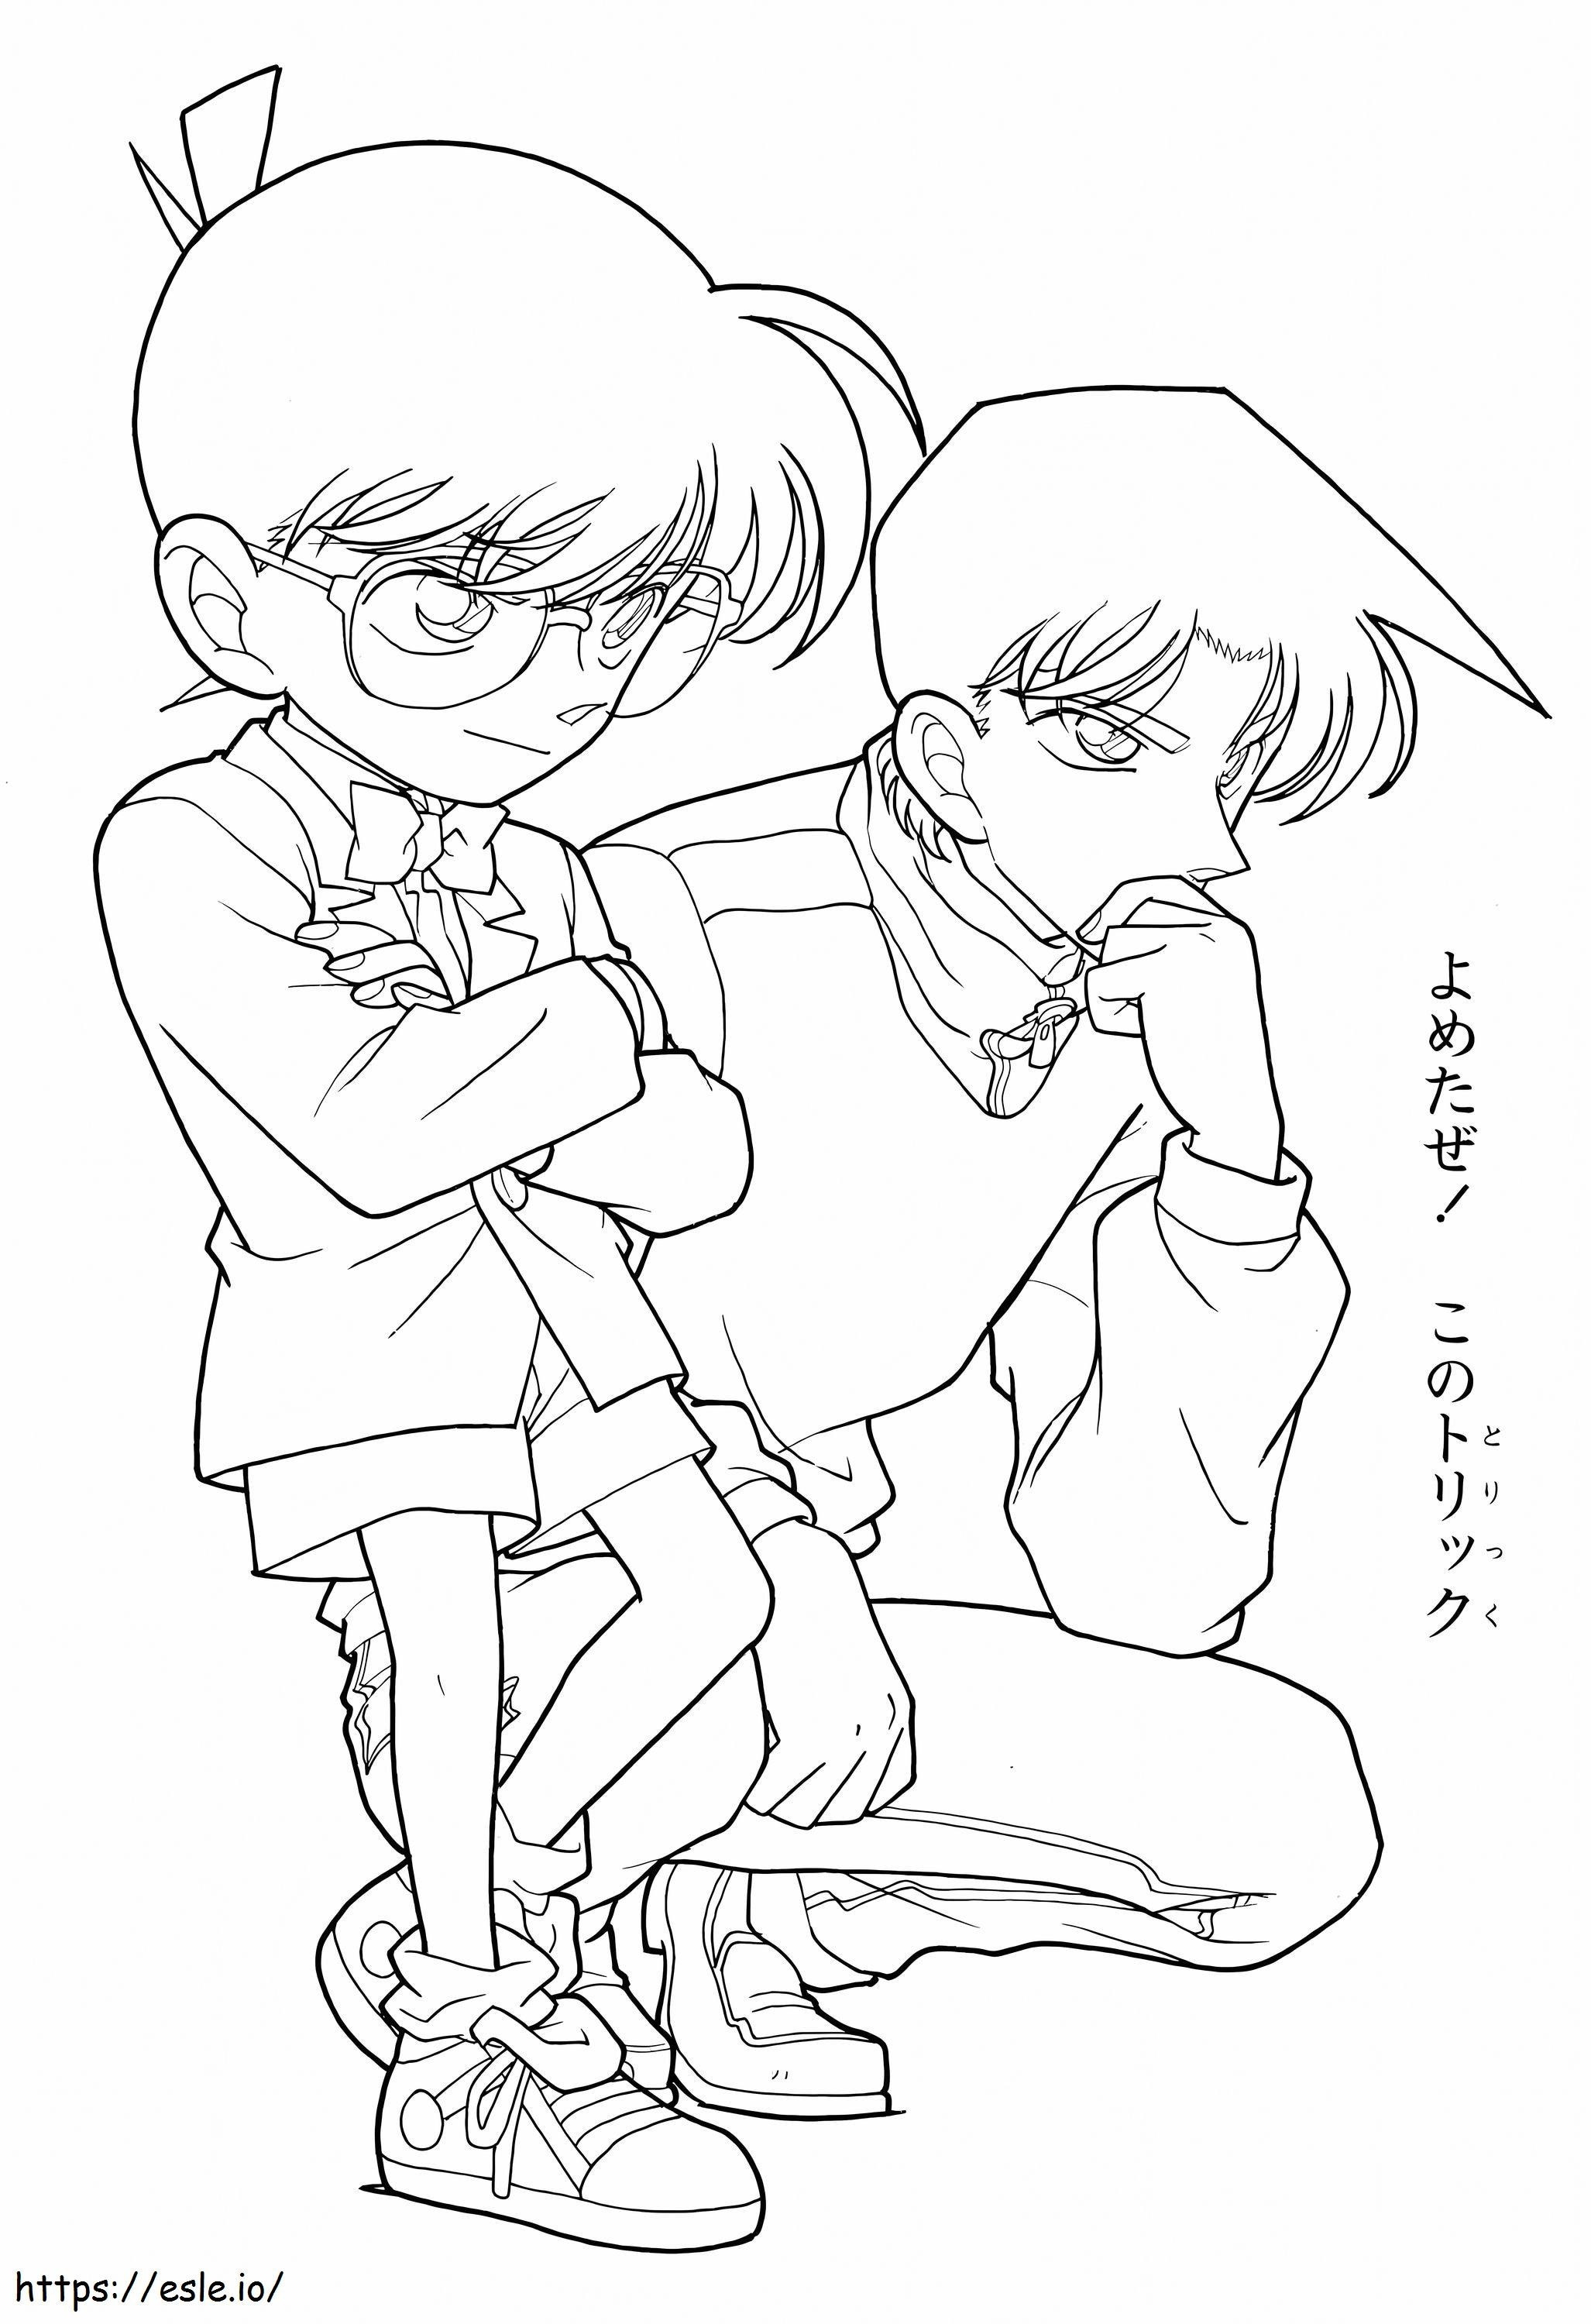 Conana i Shinichiego kolorowanka